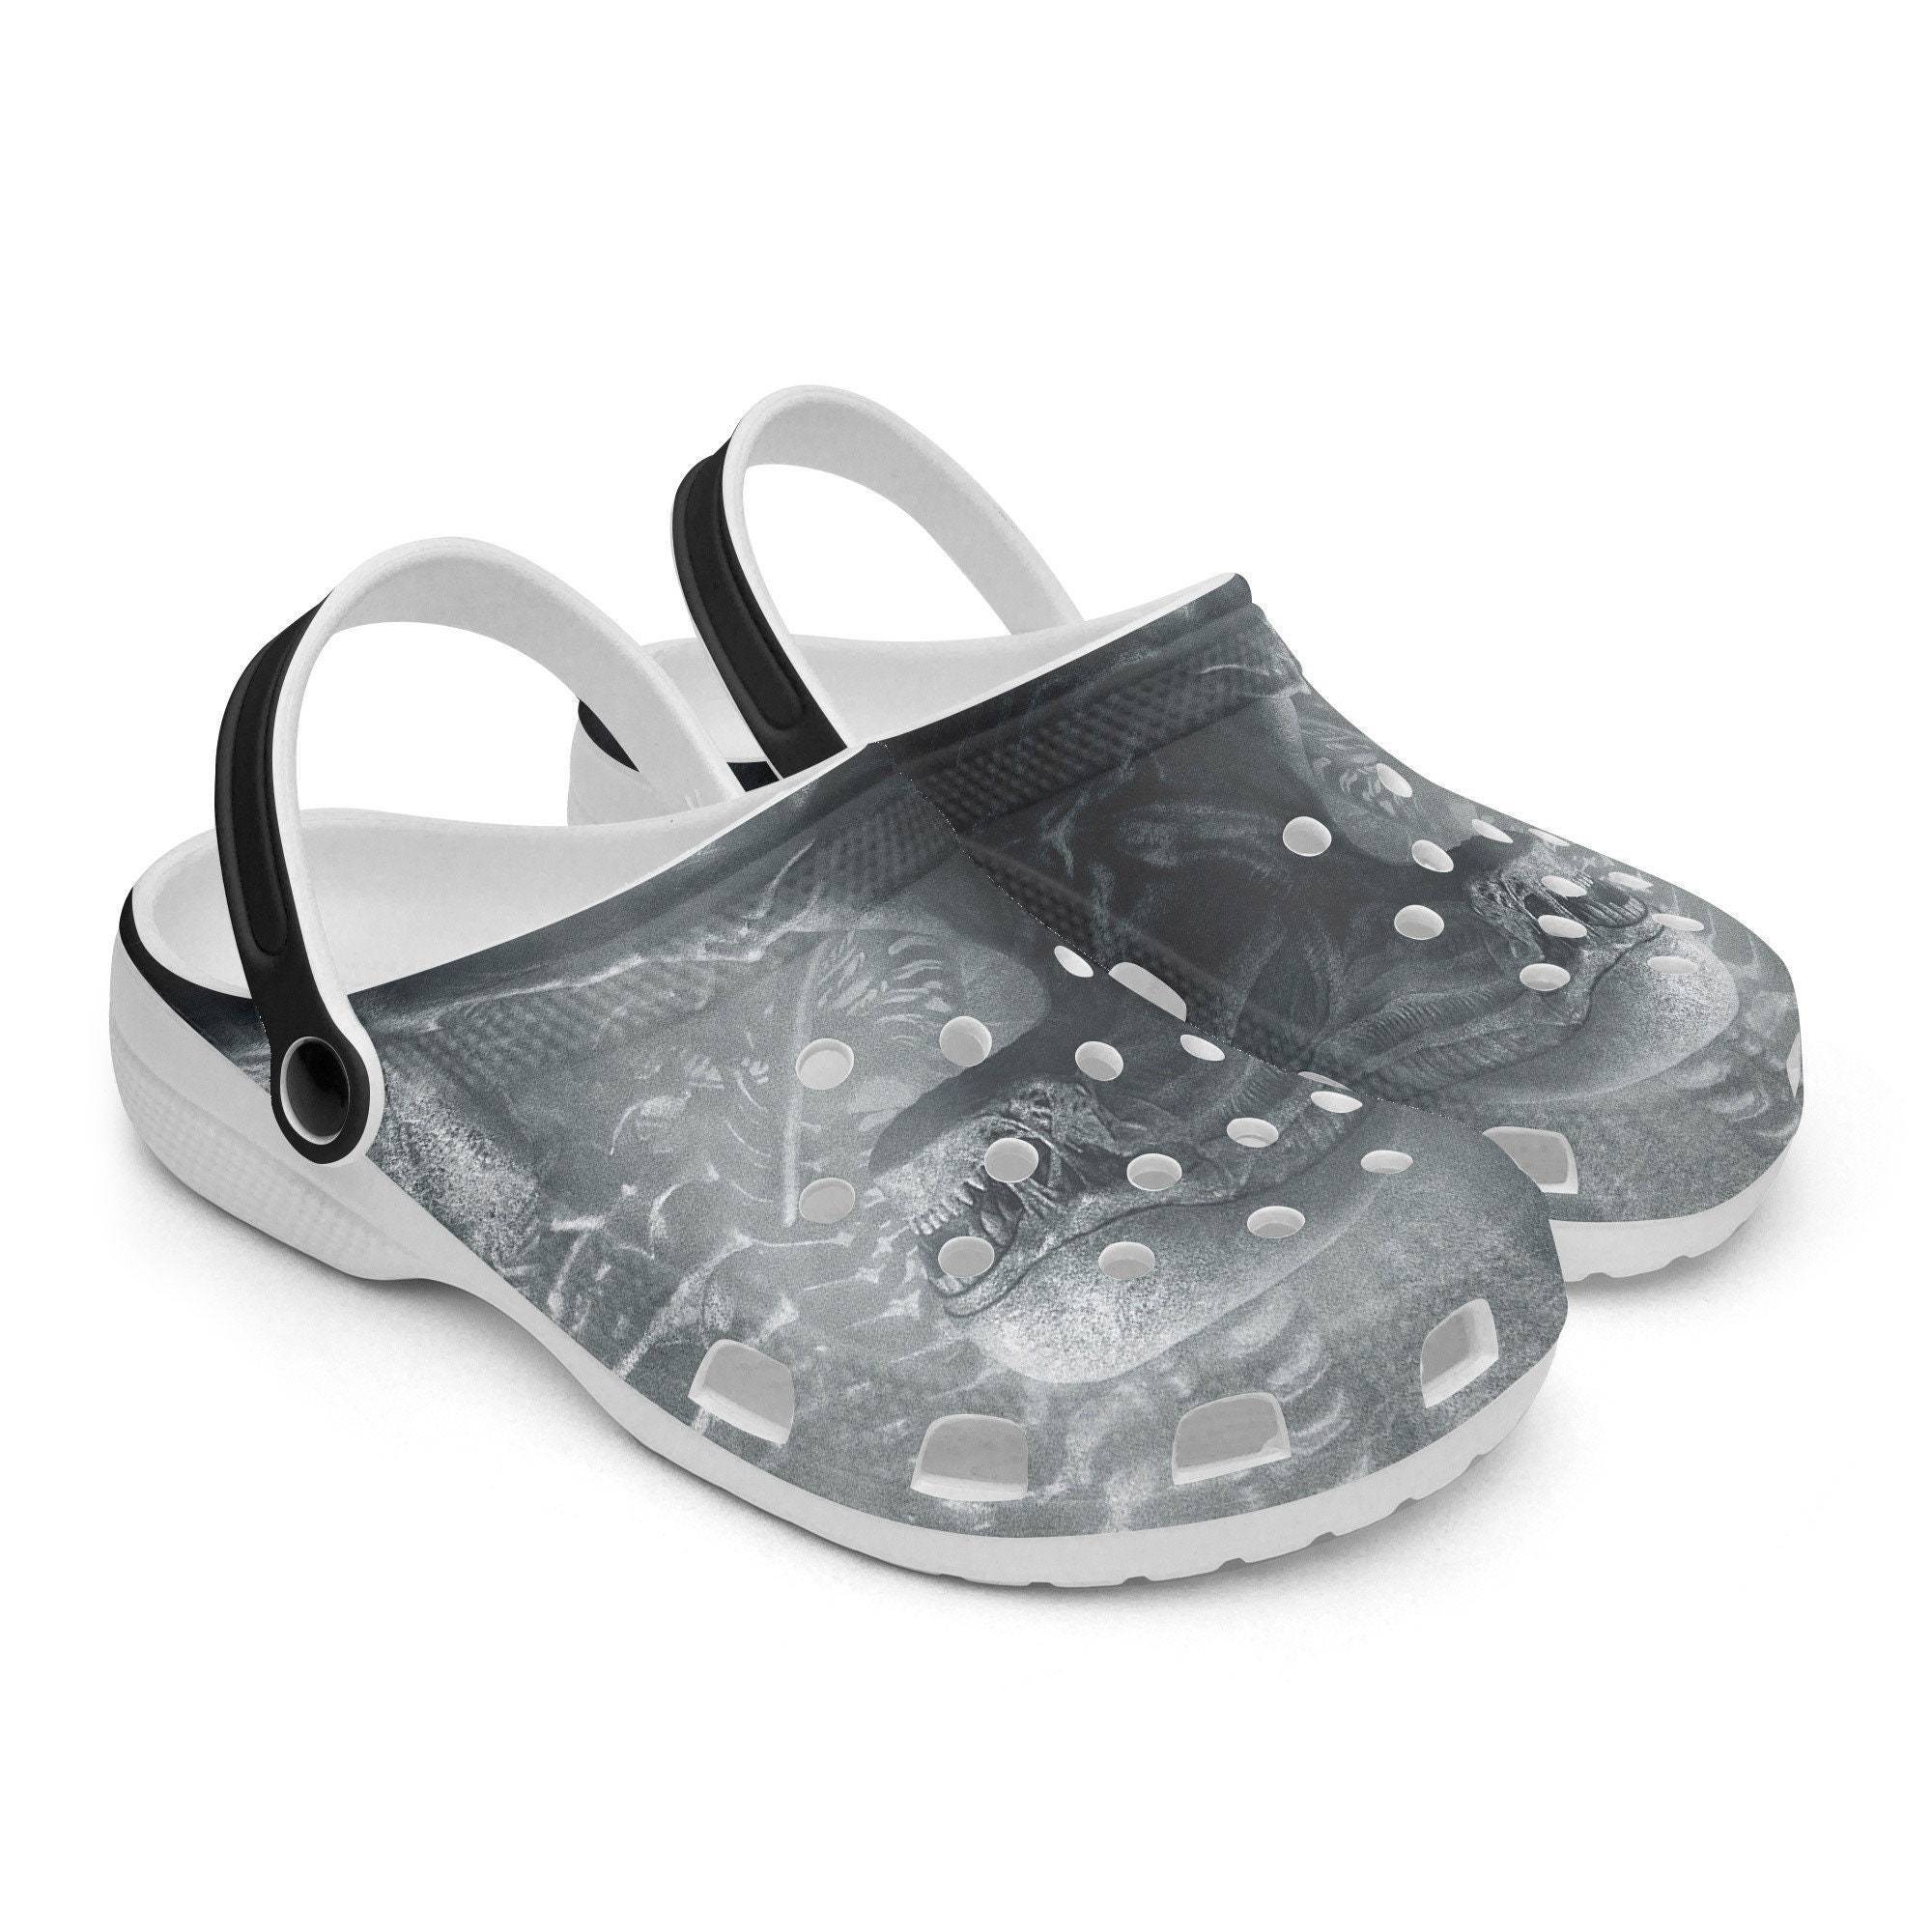 Alien Convenant Clogs, Looks Like Crocs Shoes, Women And Kids